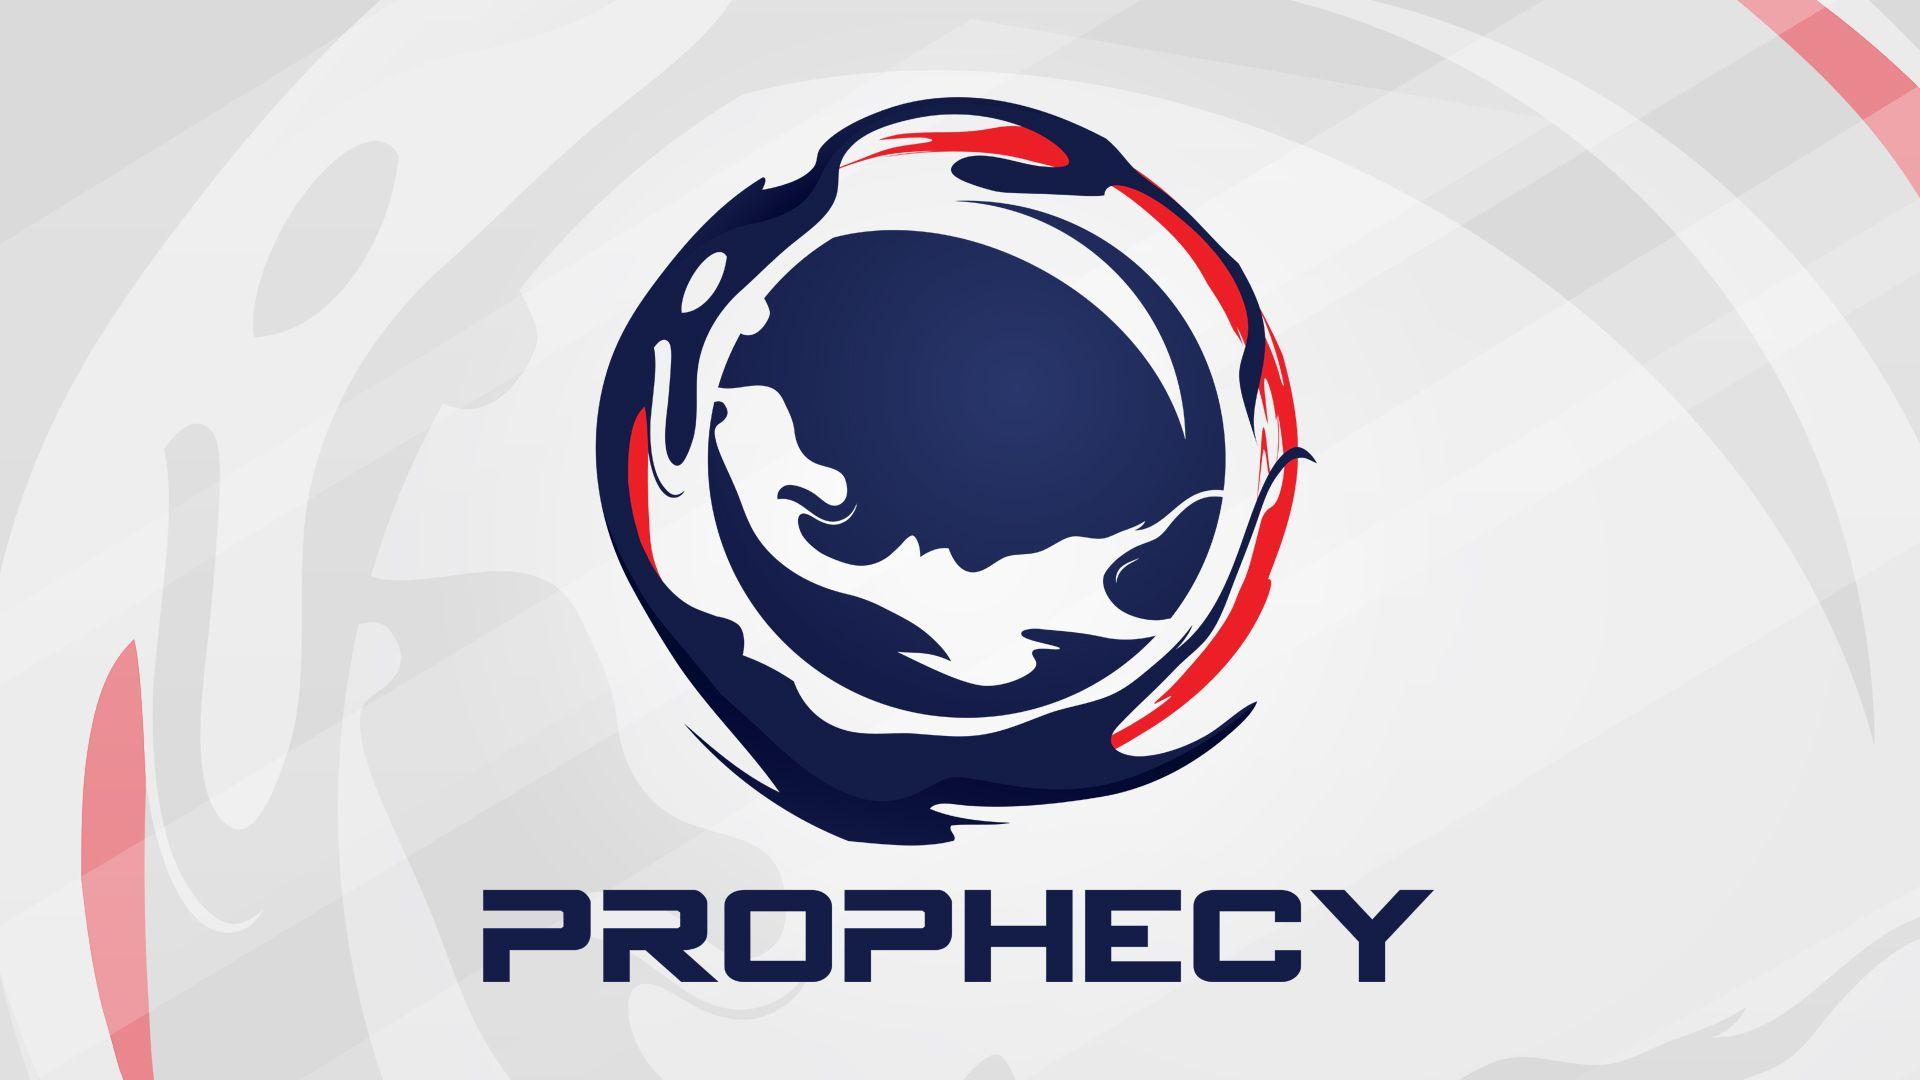 MLG Team Logo - Prophecy Team Logo - Beyond Entertainment